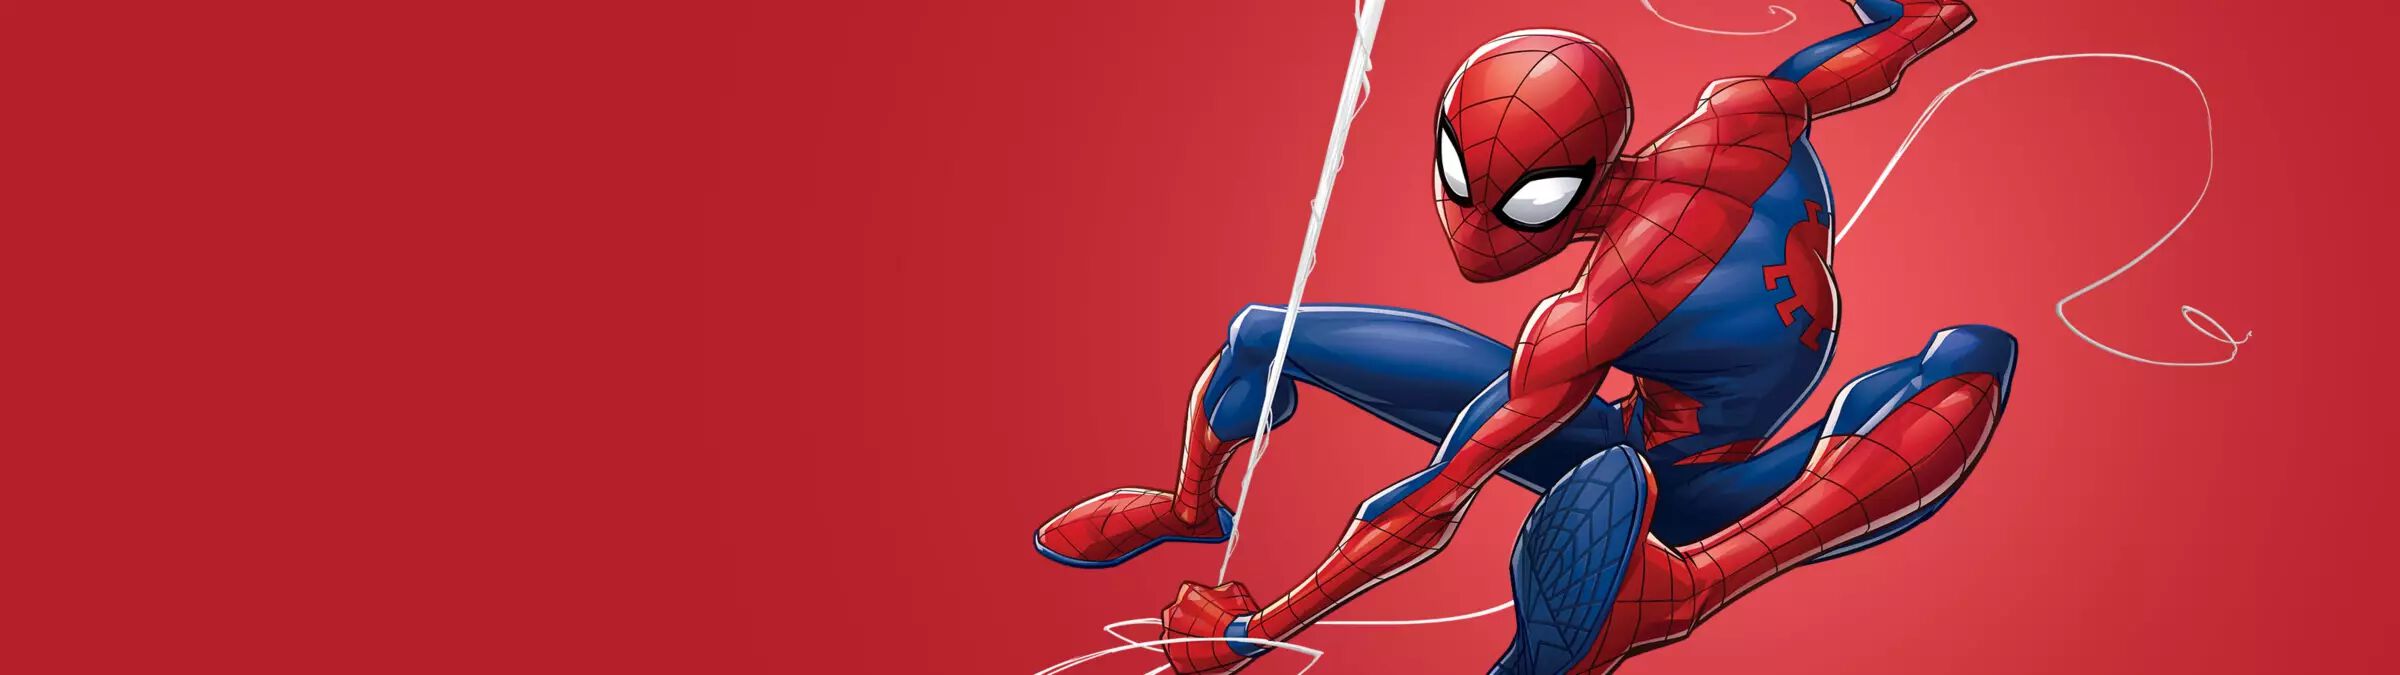 Spider-man Web Slinging on a red background